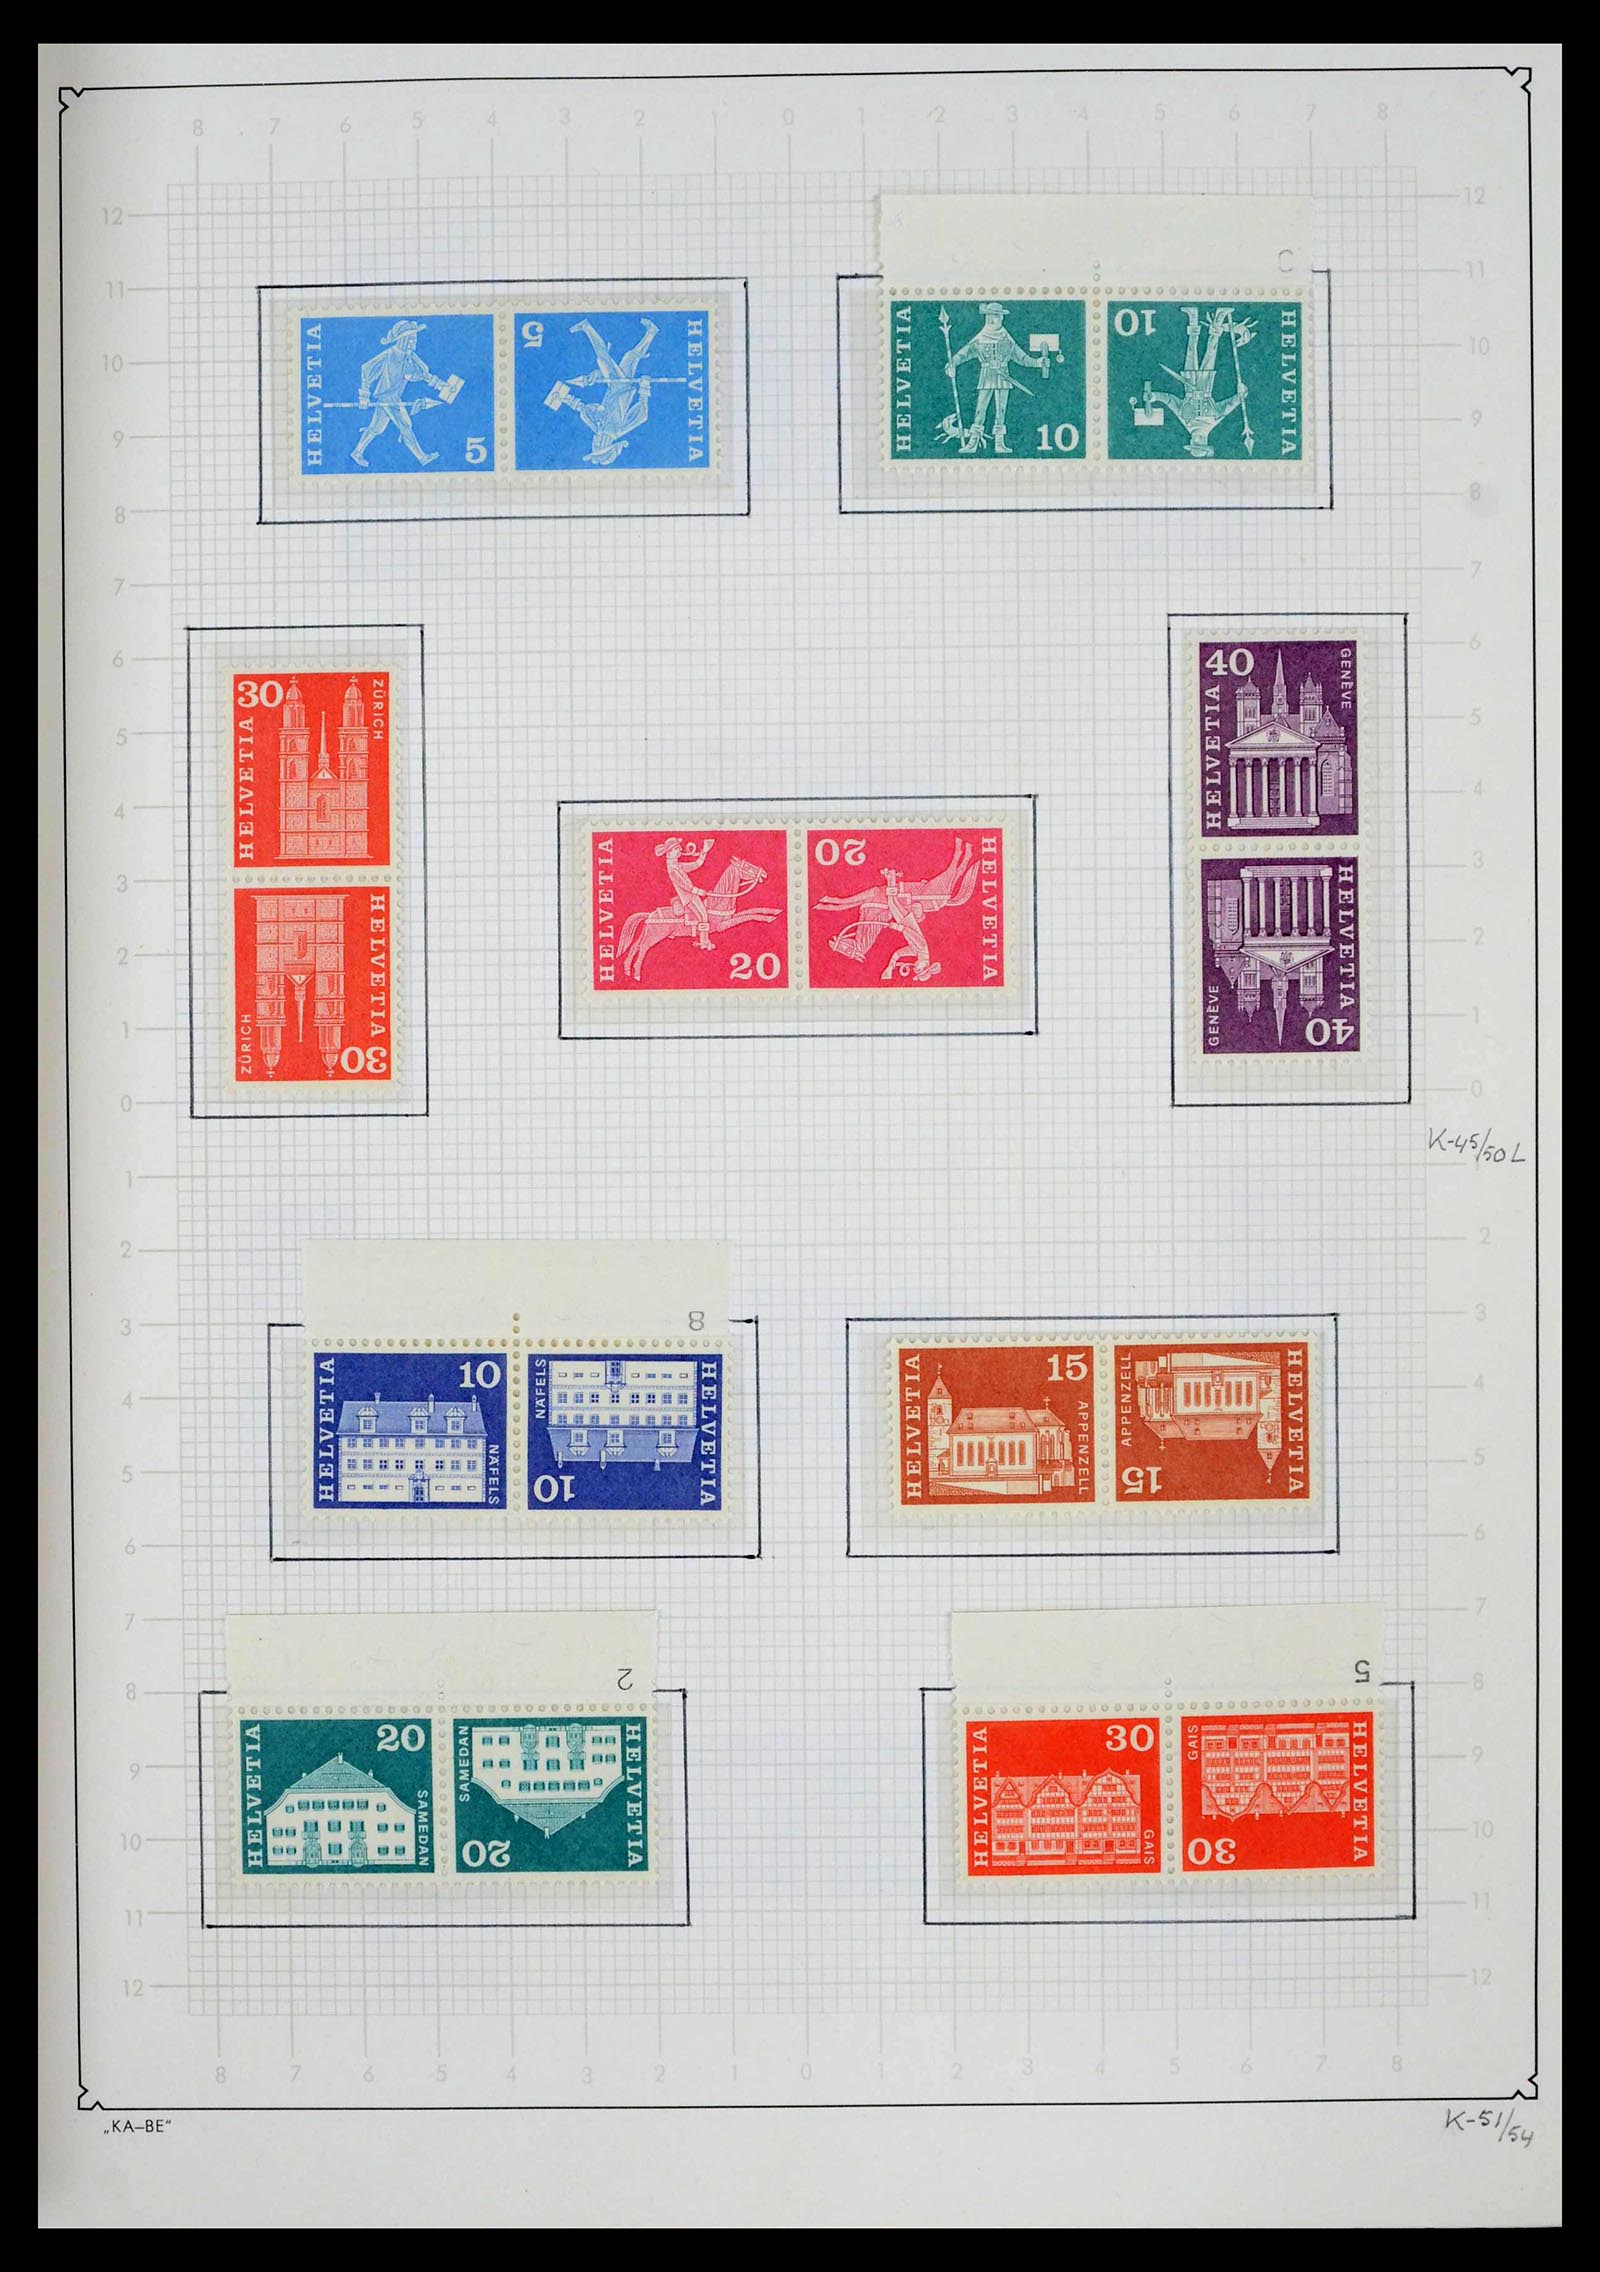 39420 0182 - Stamp collection 39420 Switzerland 1862-1974.